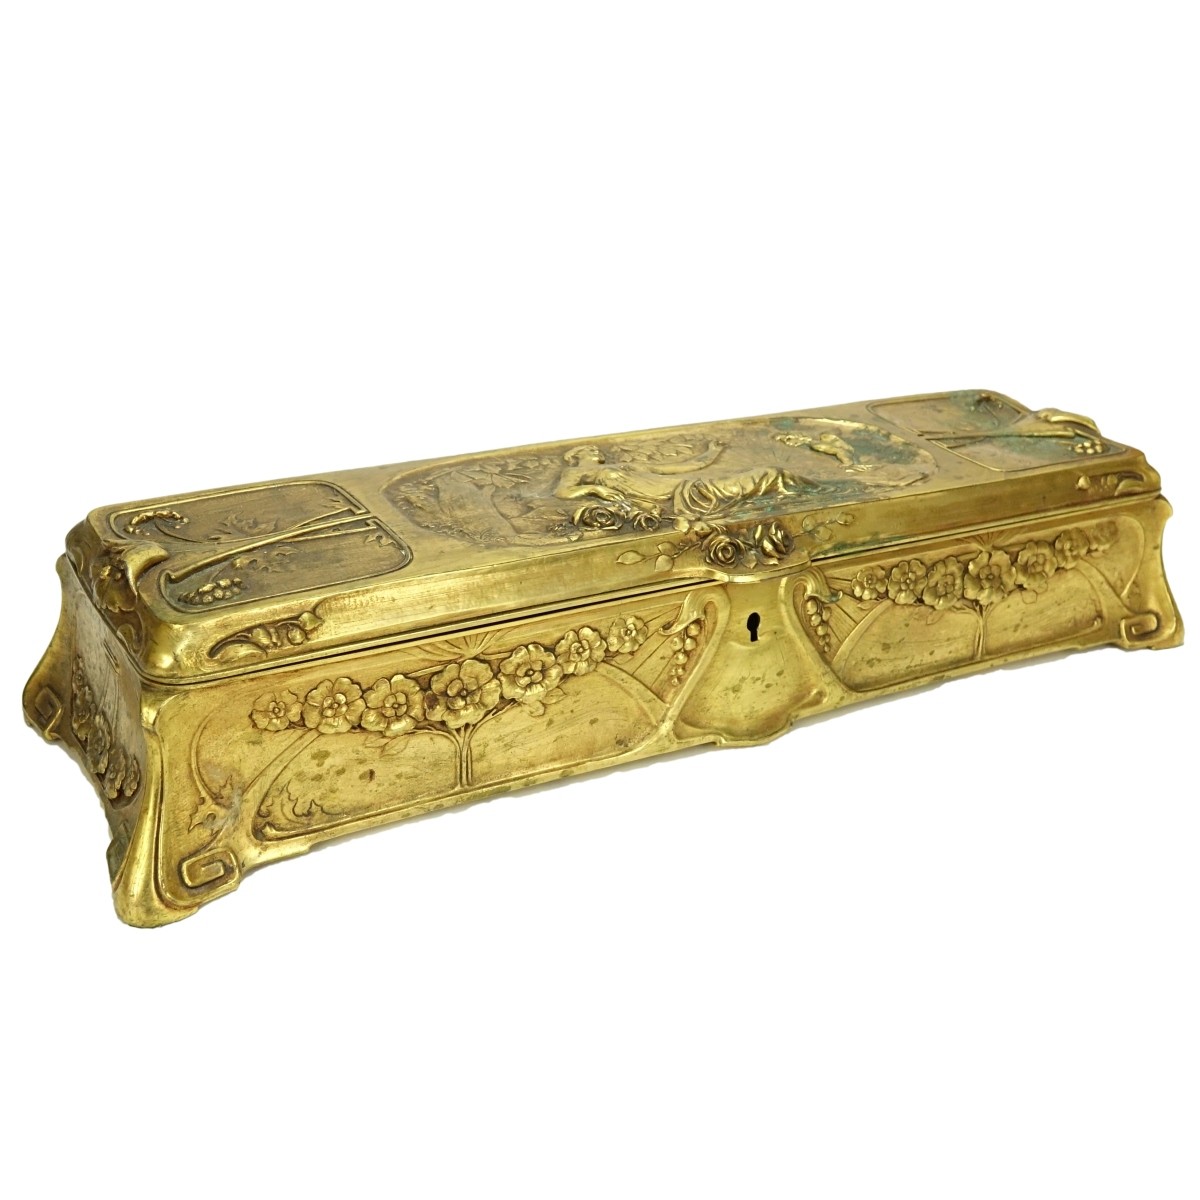 Antique French Art Nouveau Gilt Metal Hinged Box